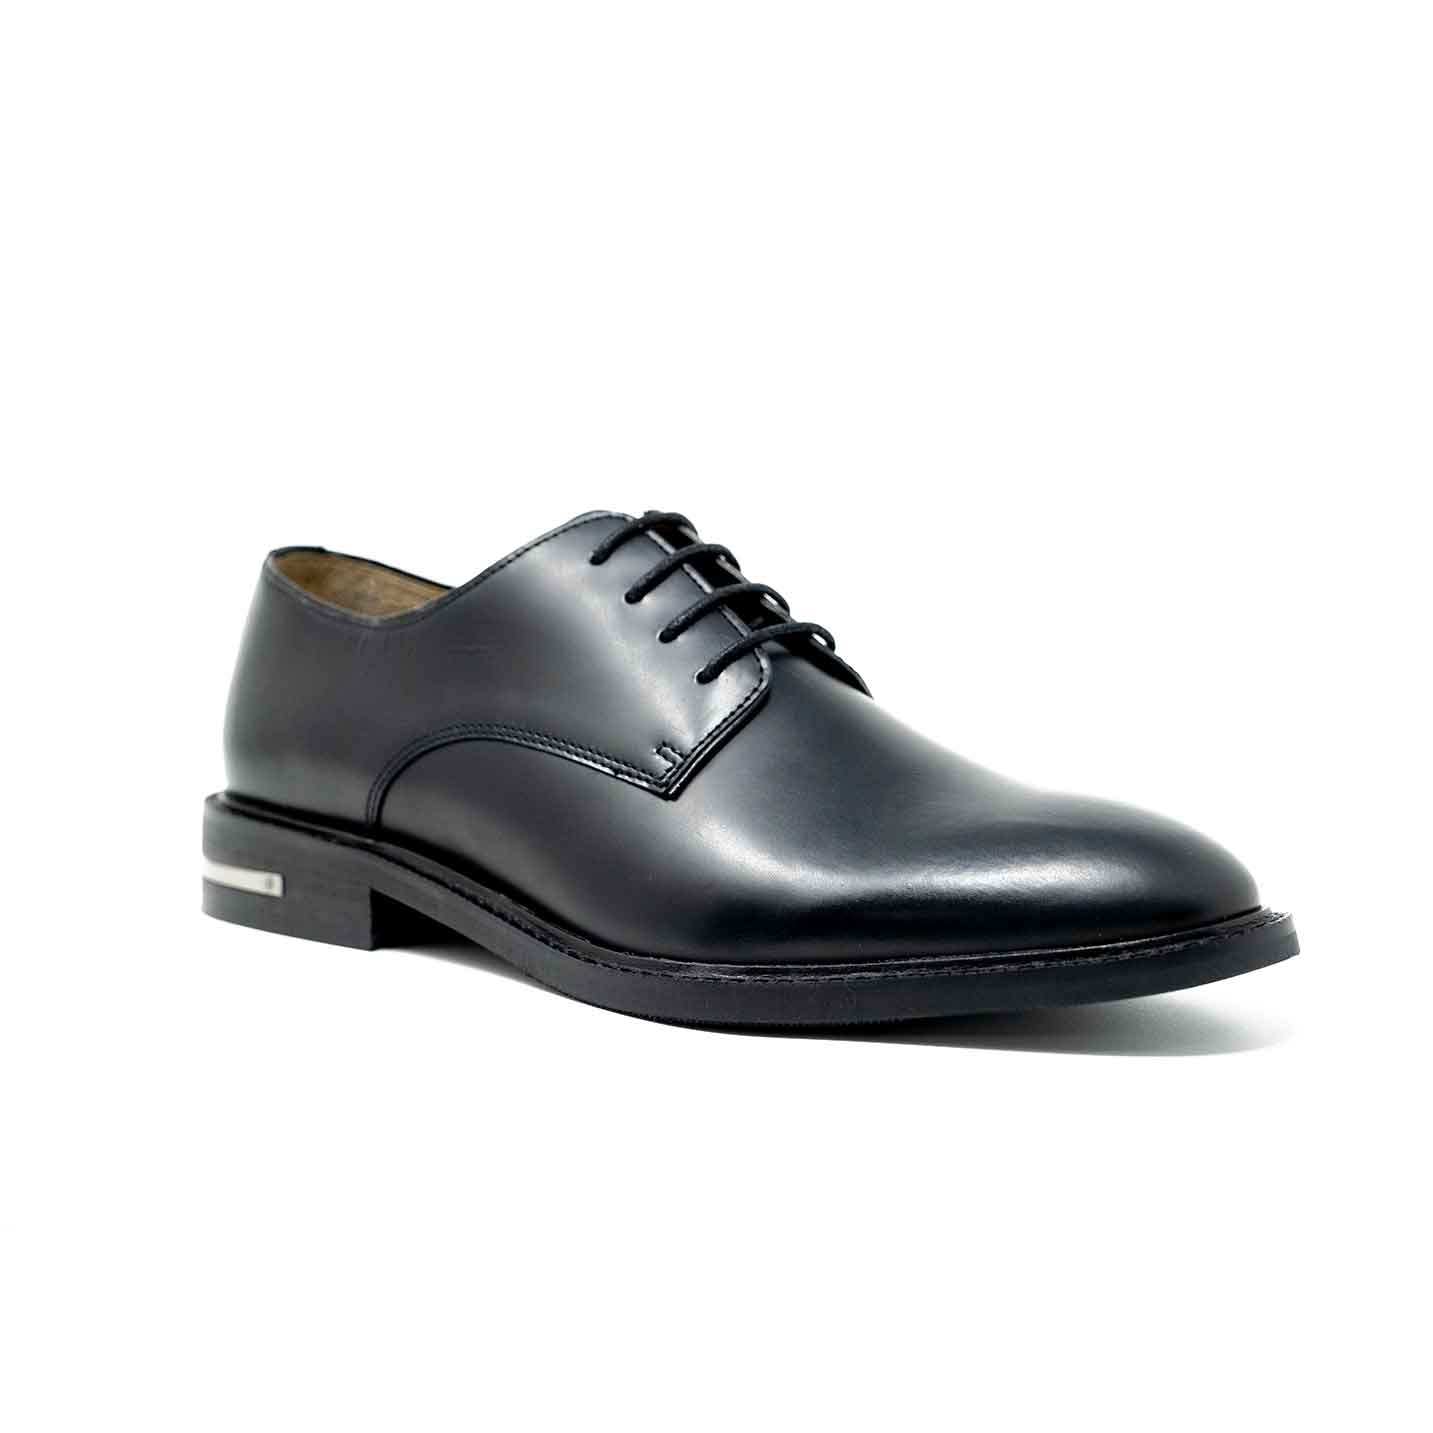 Men's Black Leather Derby Shoe with Heel Clip